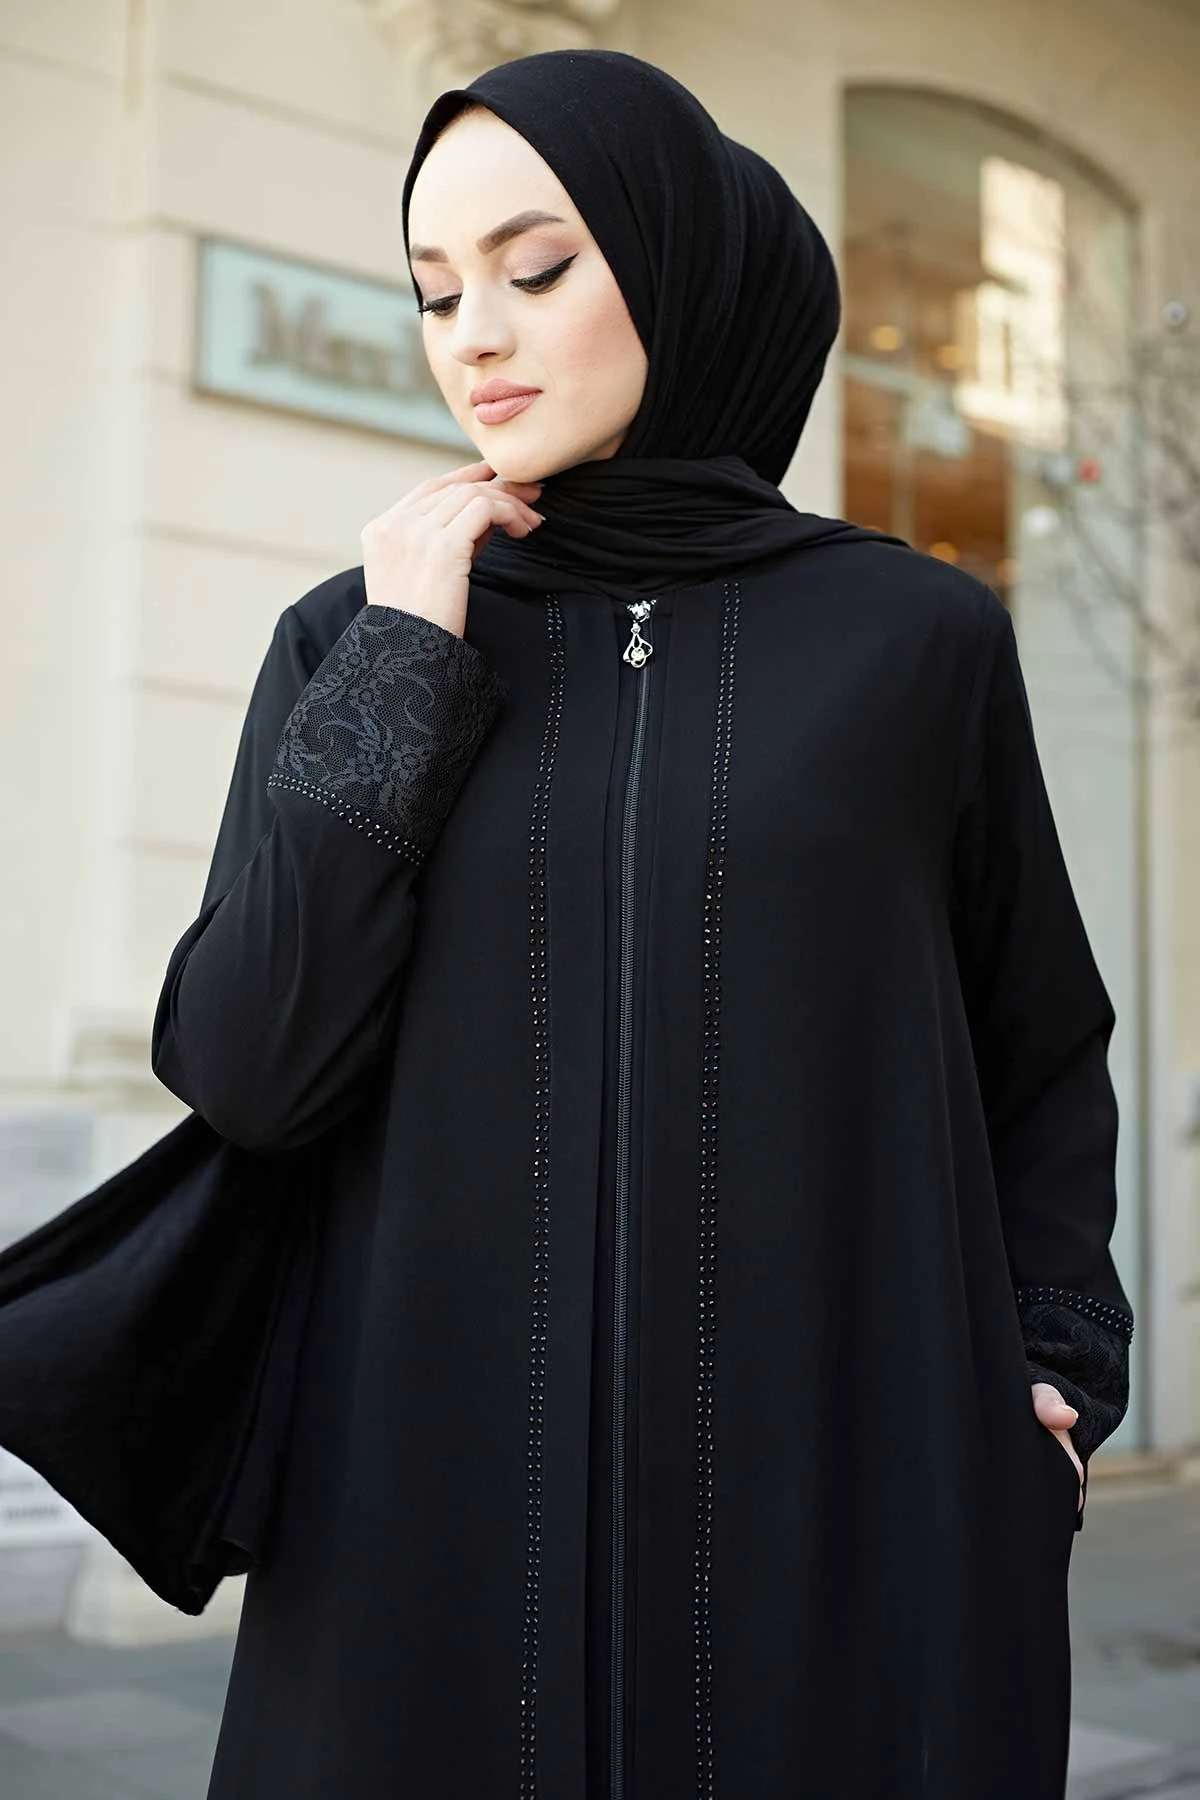 

Lace Detailed Abaya Dress Turkey Muslim Fashion Islam Clothing Dubai Istanbul Istanbulstyles 2021